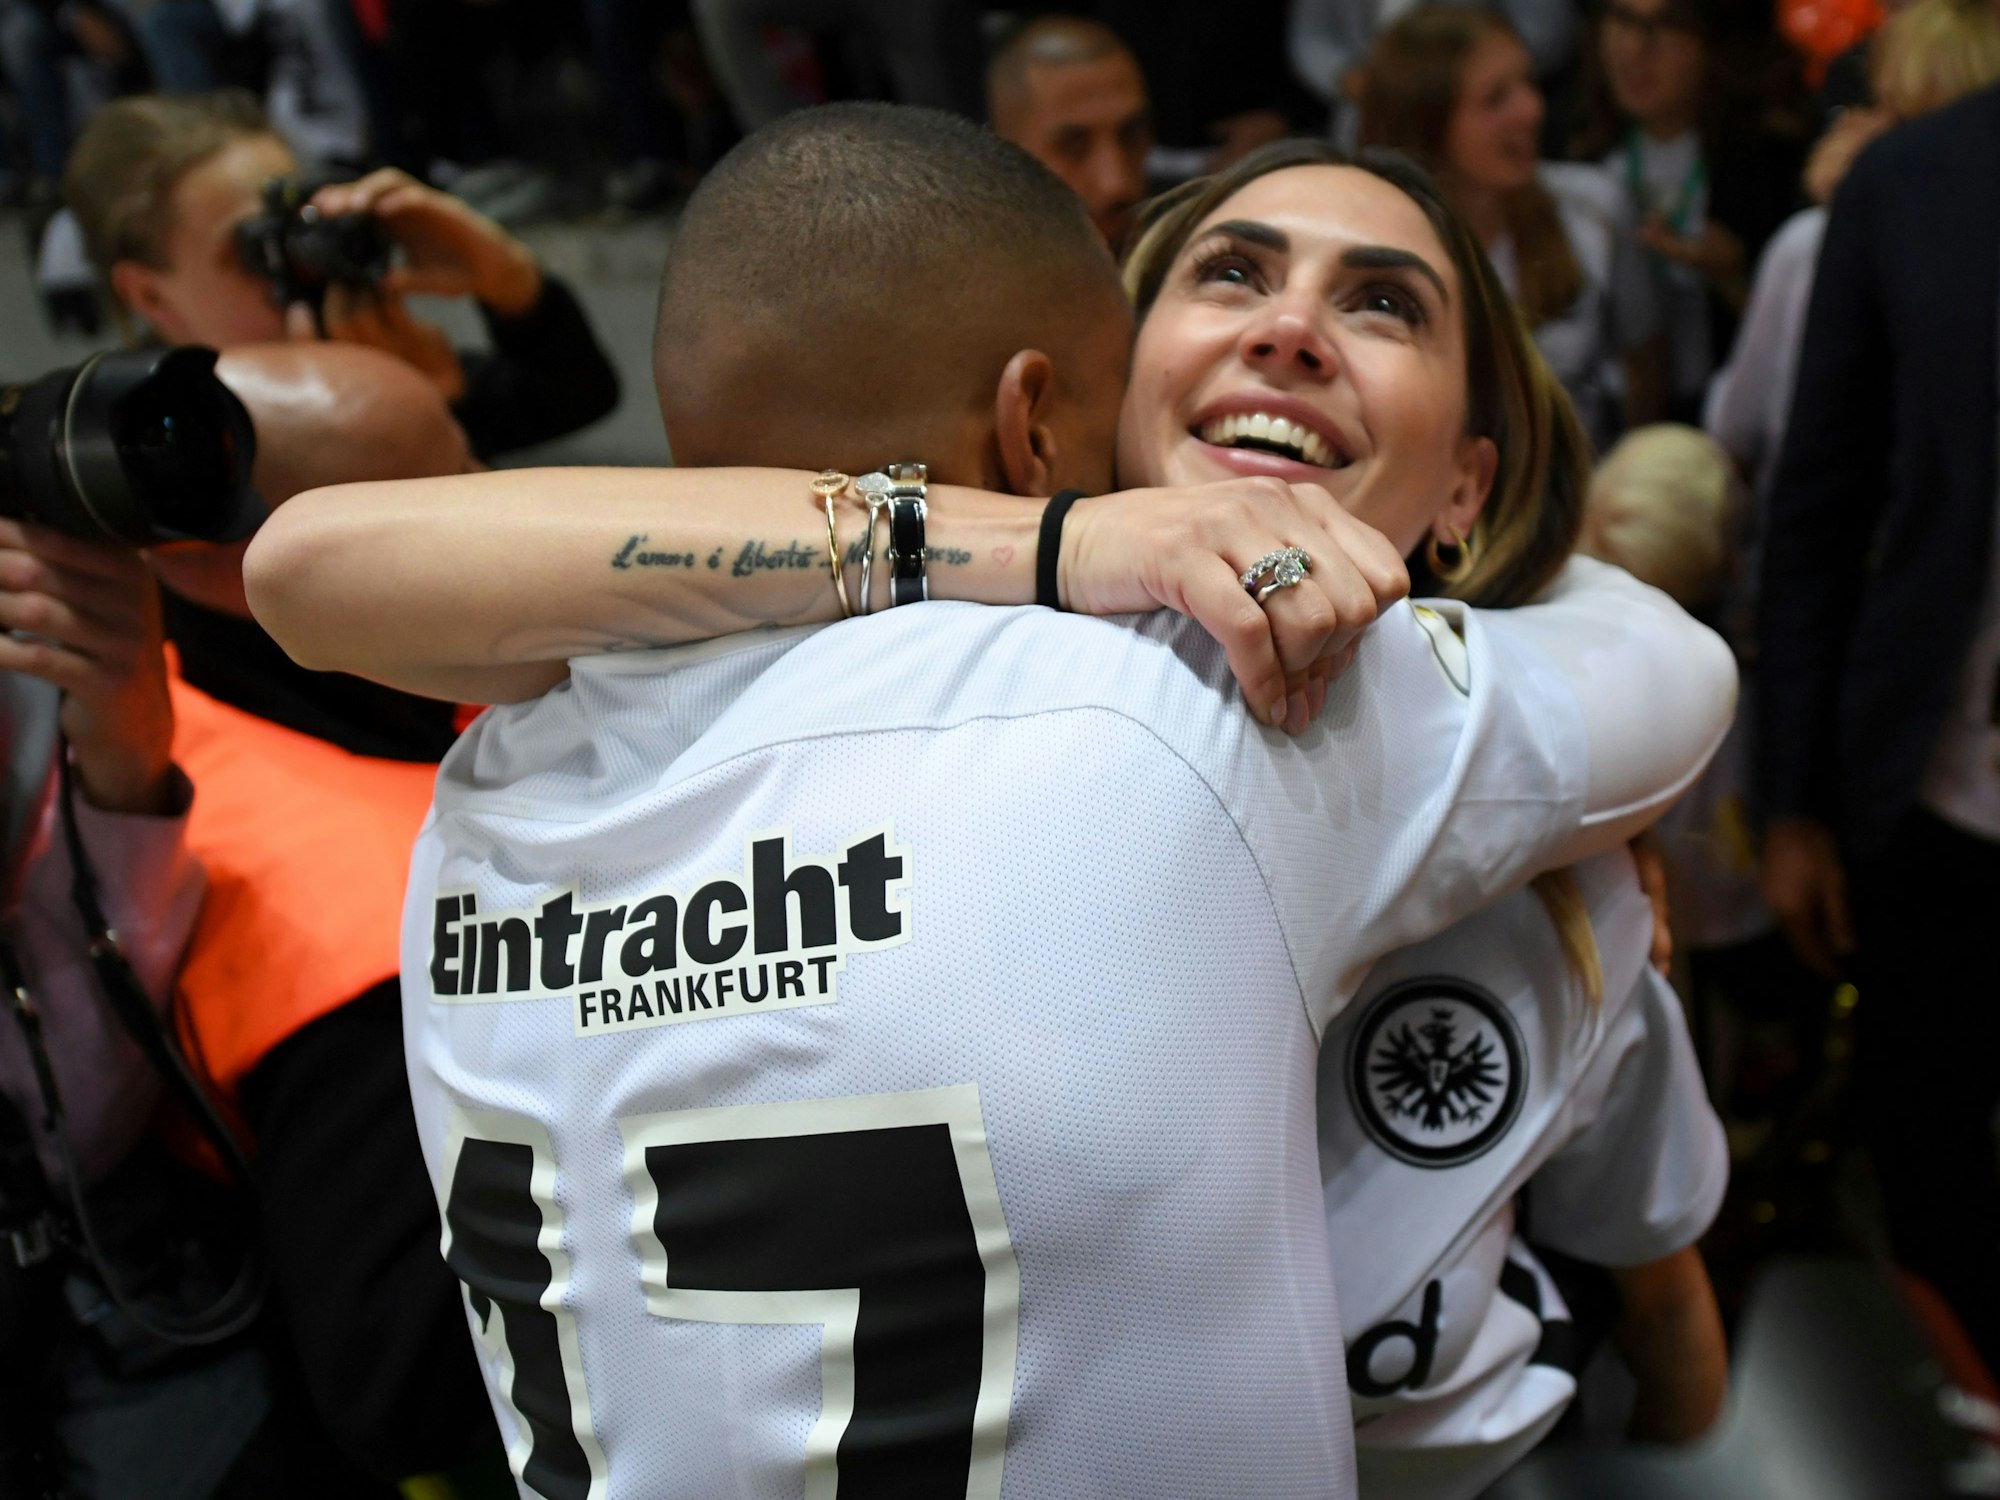 Kevin-Prince Boateng umarmt nach dem Triumph im DFB-Pokal-Finale seine Frau Melissa.